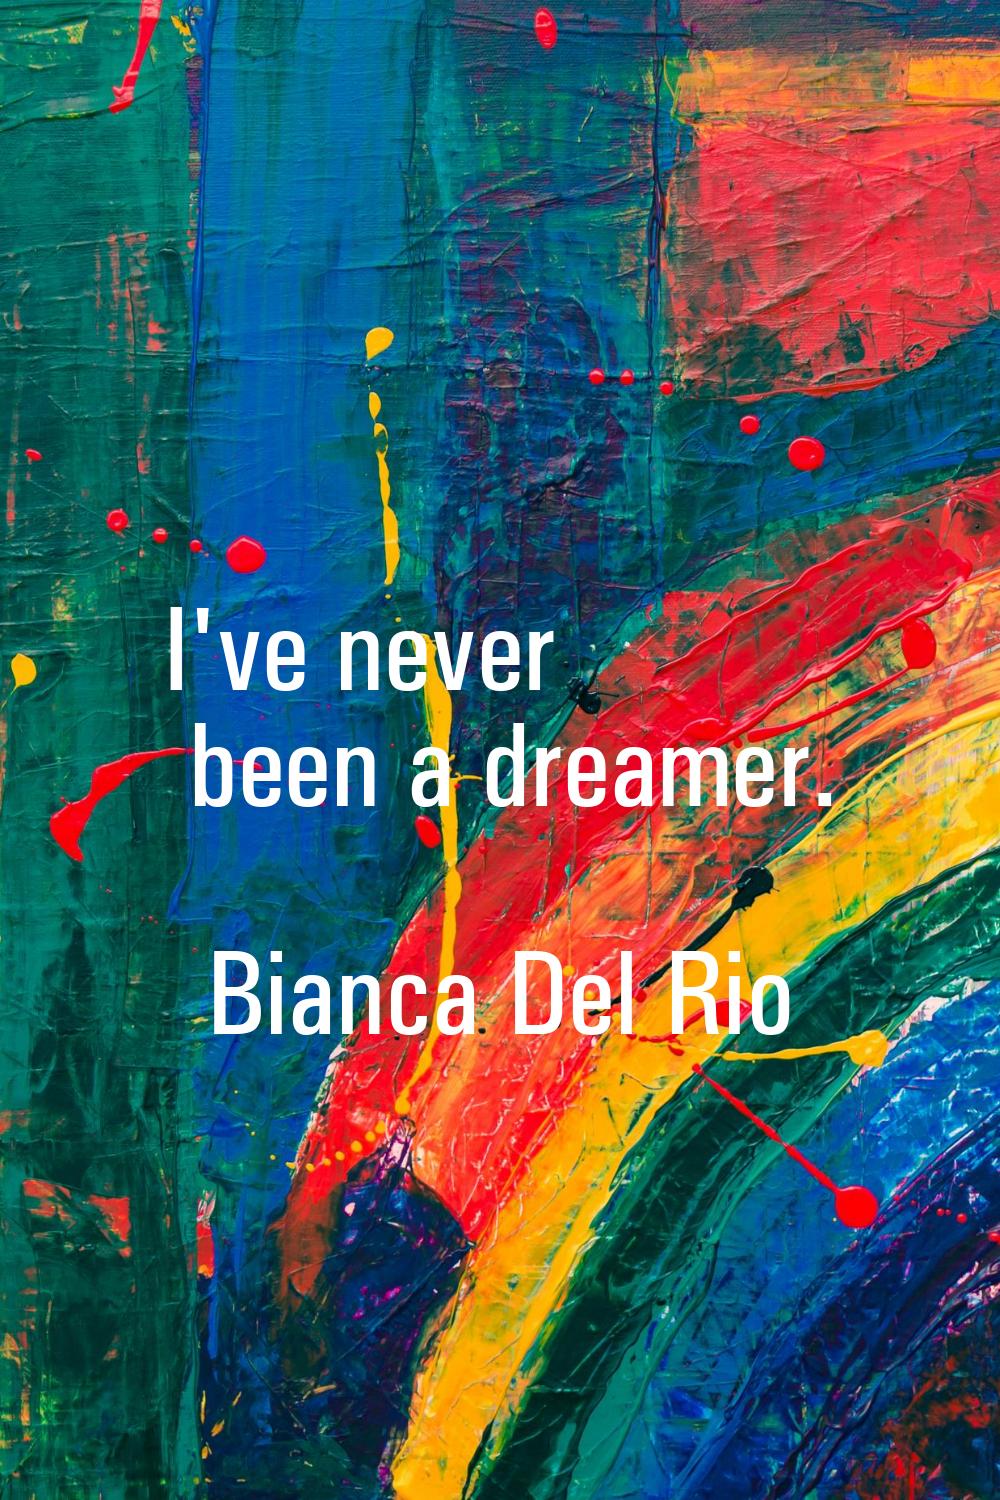 I've never been a dreamer.